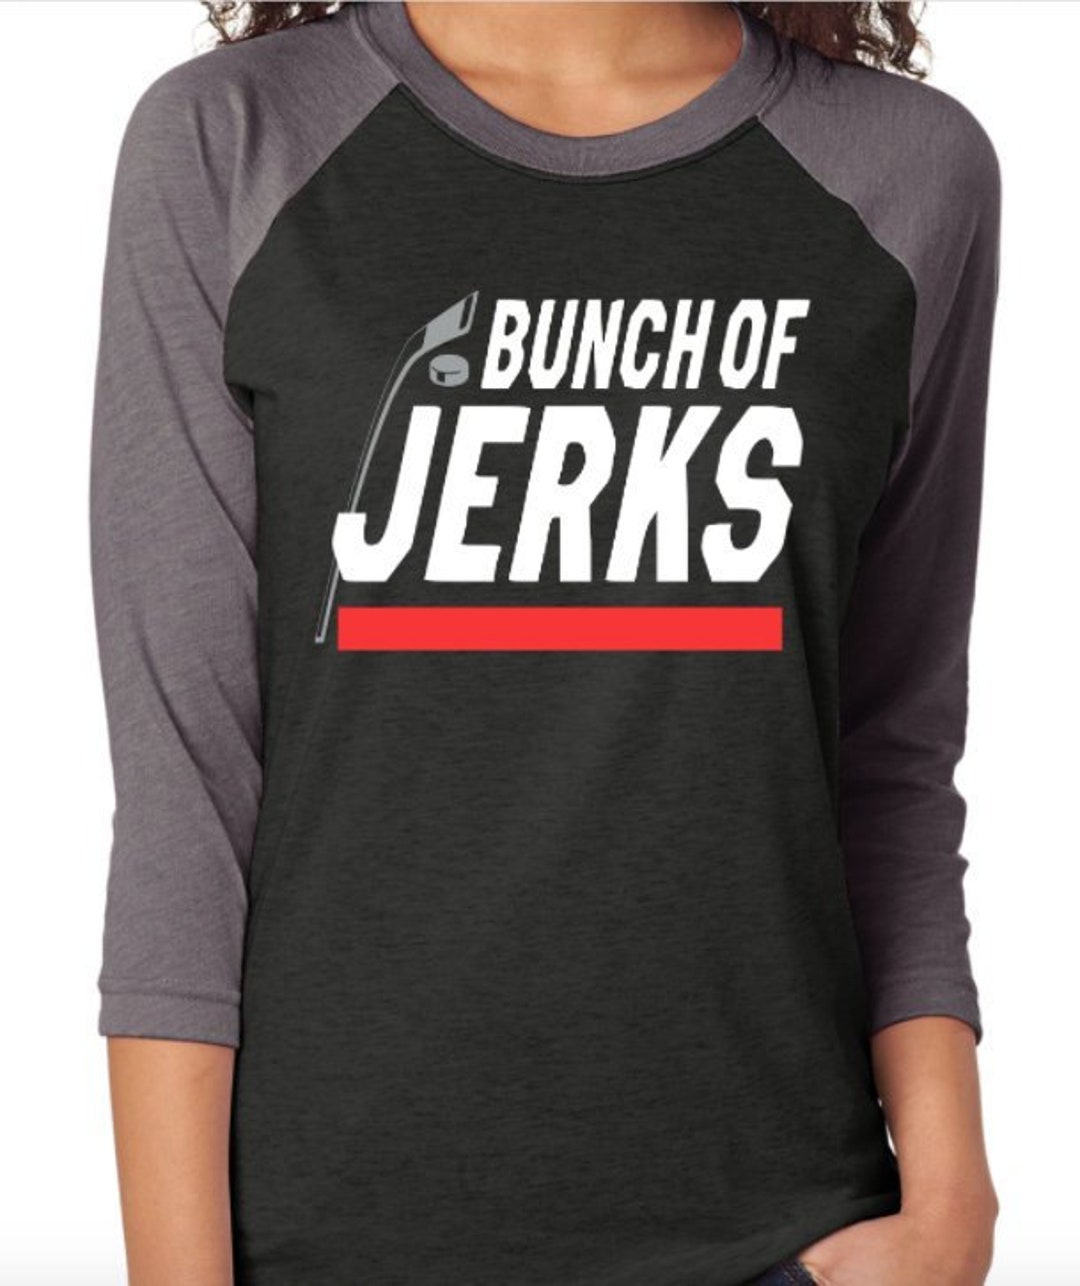 NEW* Bunch of Jerks - Carolina Hurricanes Bunch Of Jerks - T-Shirt